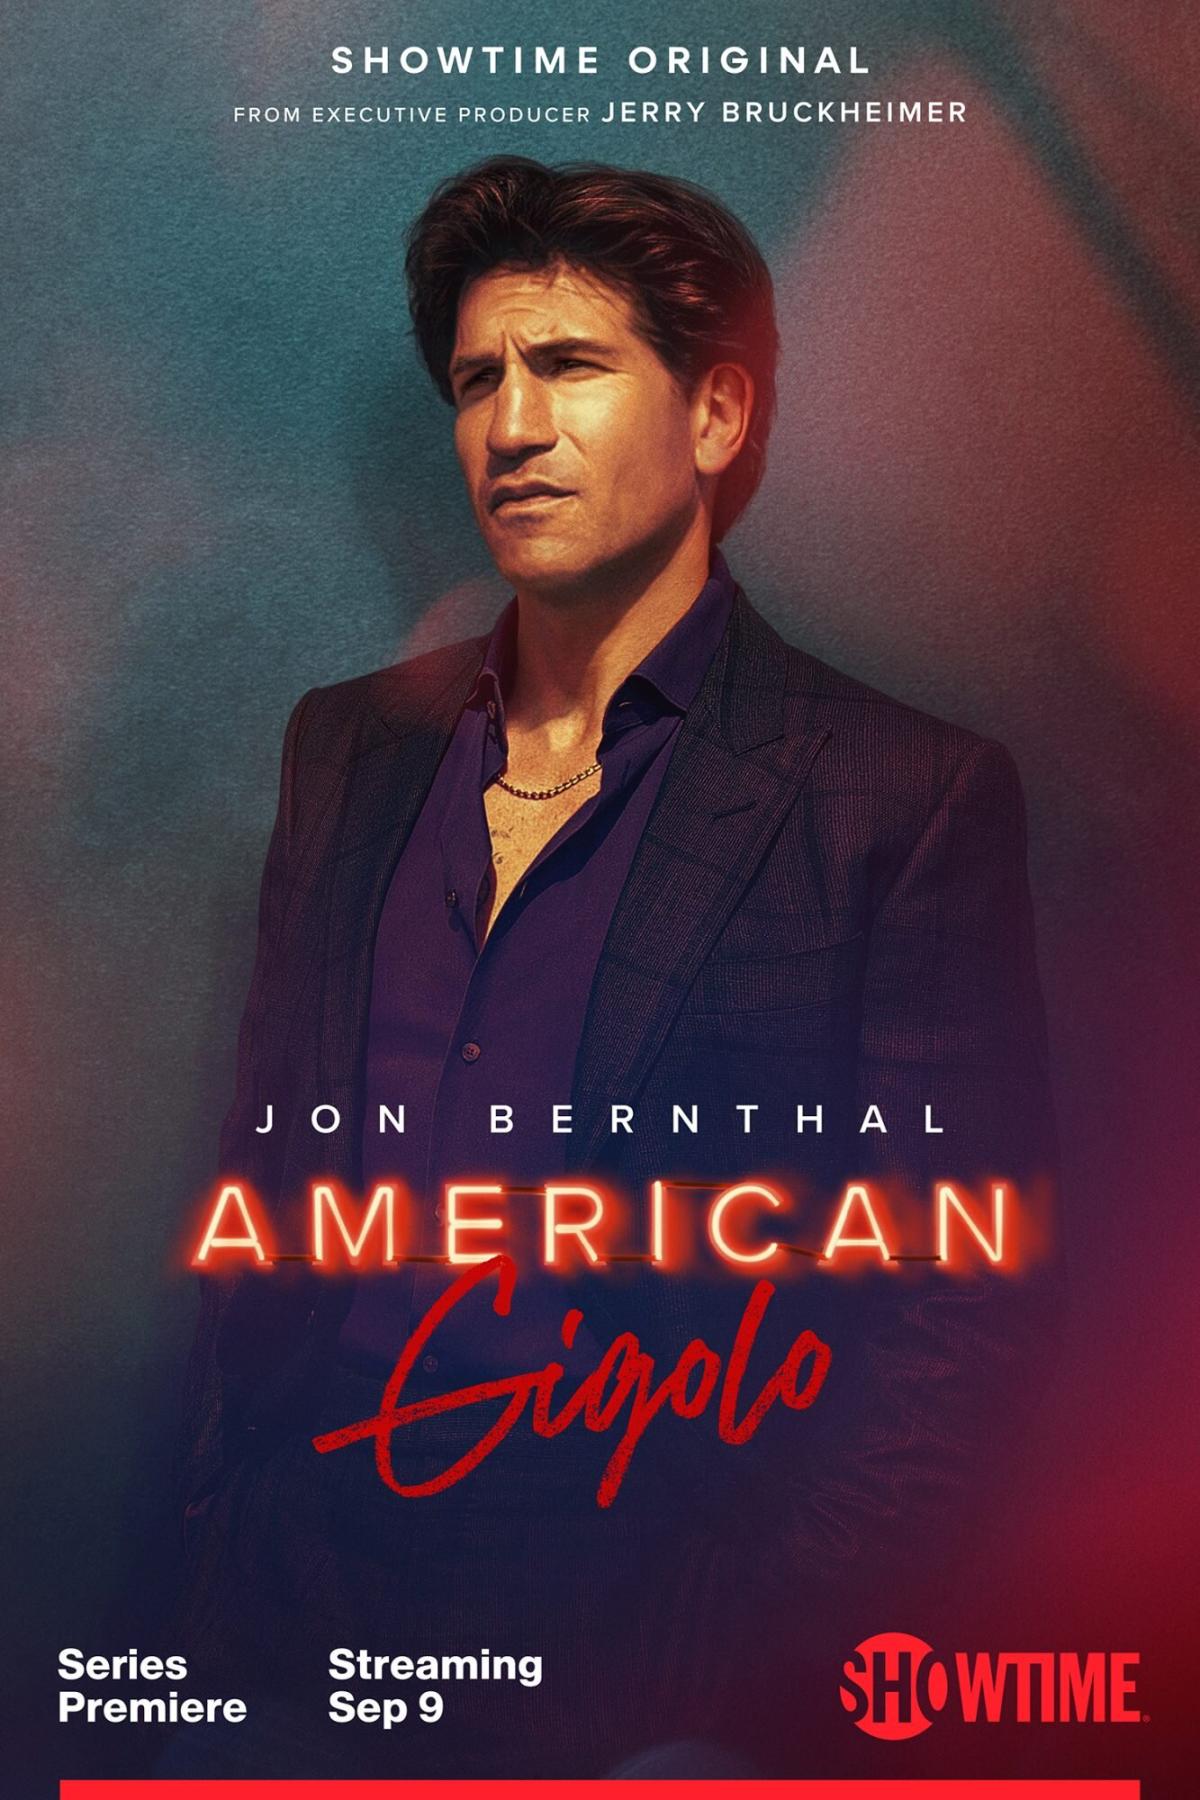 New American Gigolo Remake Trailer Sees Jon Bernthal as Former Male Escort Julian Kaye photo